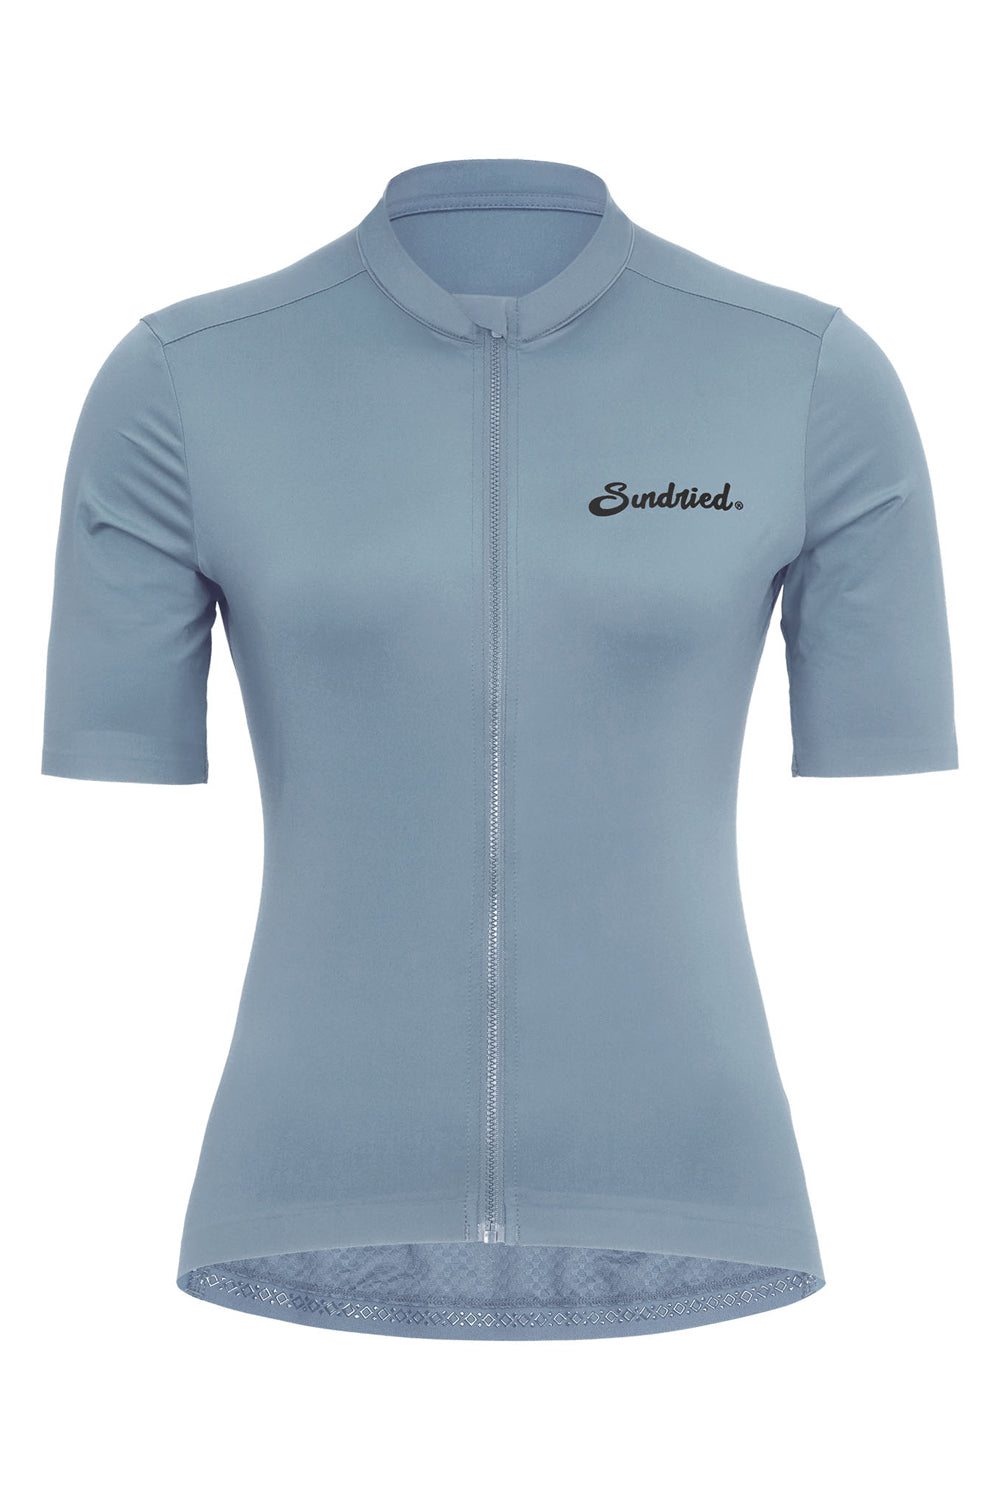 Sundried Sport Pianura Women's Grey Short Sleeve Cycle Jersey Short Sleeve Jersey XS SS1002 XS Grey Activewear